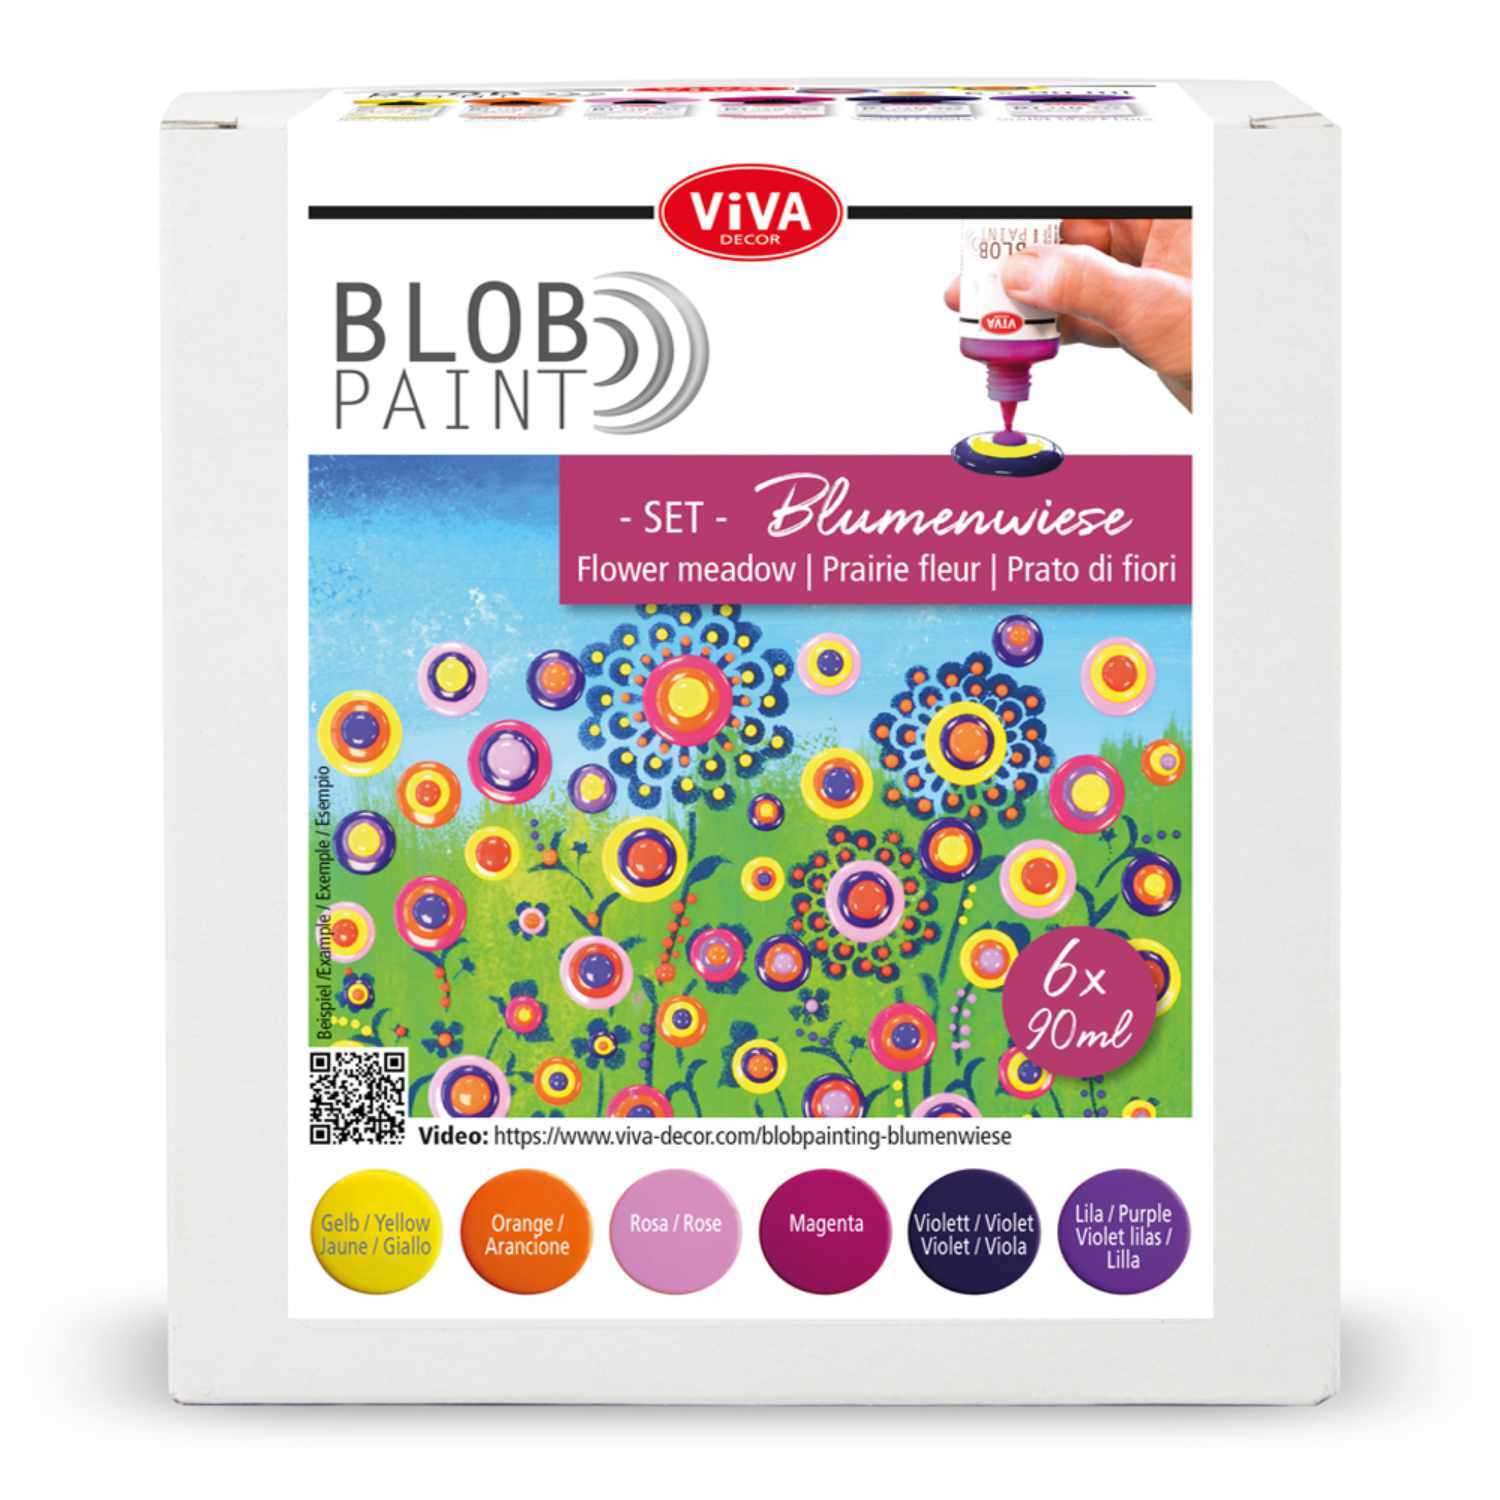 Blob Paint Set Blumenwiese 6x90ml